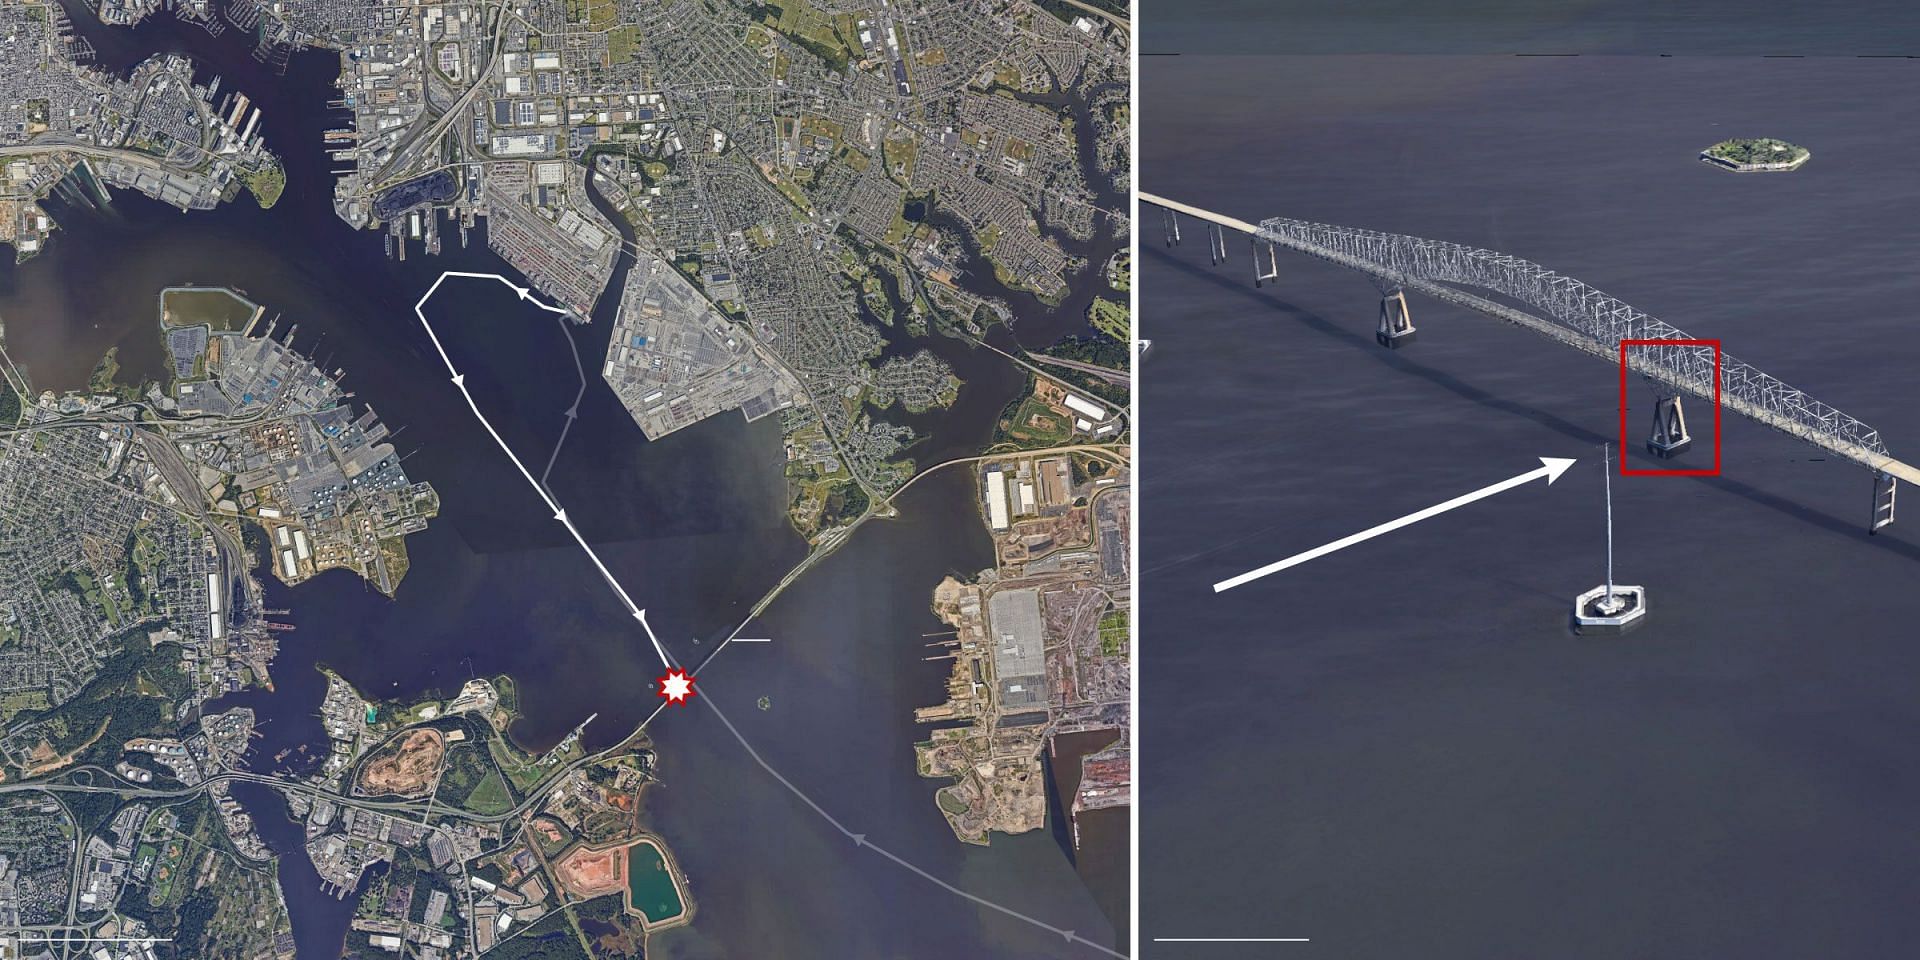 Google Earth images show where the ship crashed (Image via Spiral Globe, Google Earth)